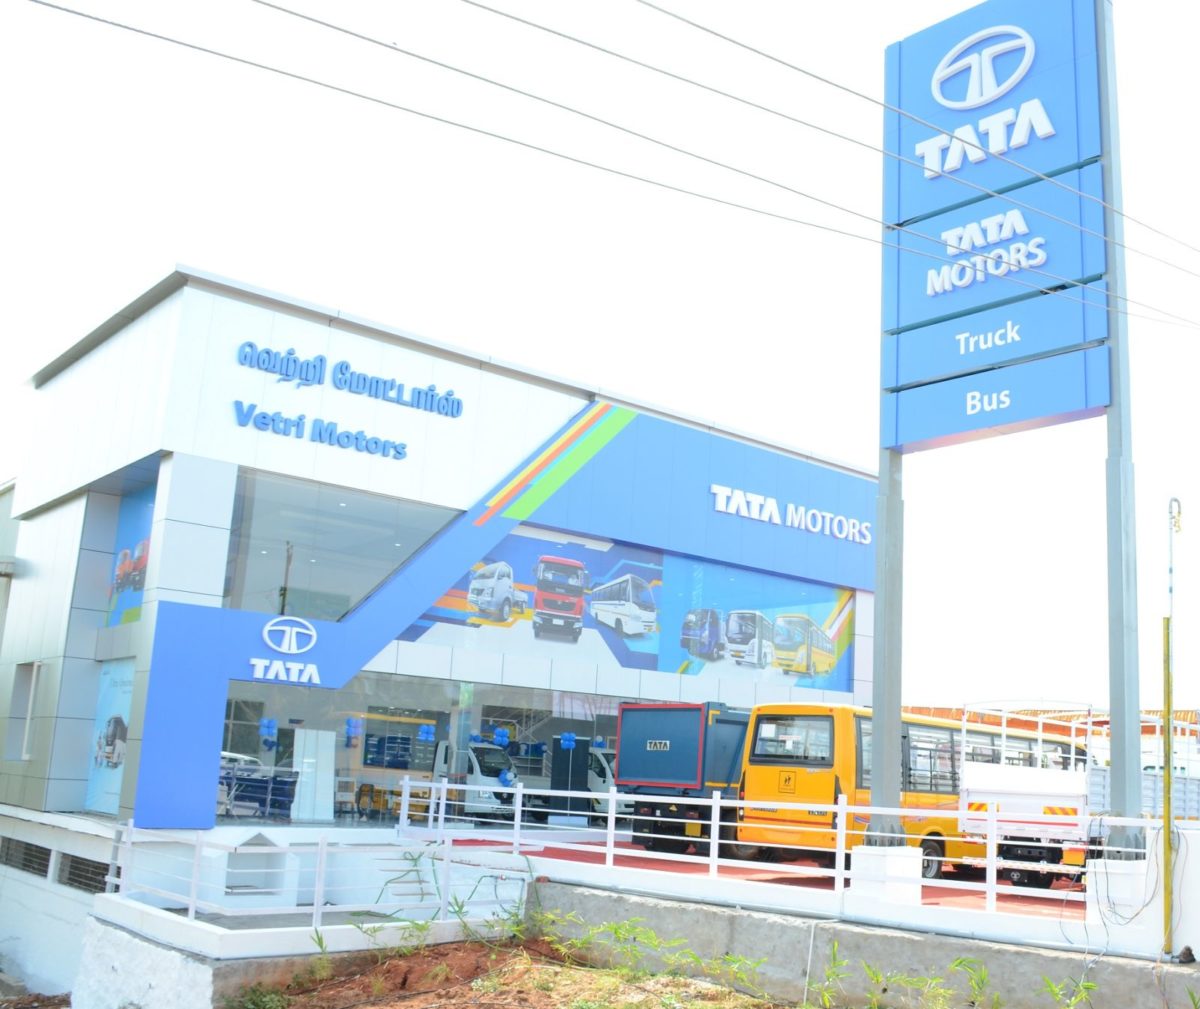 Tata Motors and Vetri Motors open new S commercial vehicle facility in Madurai